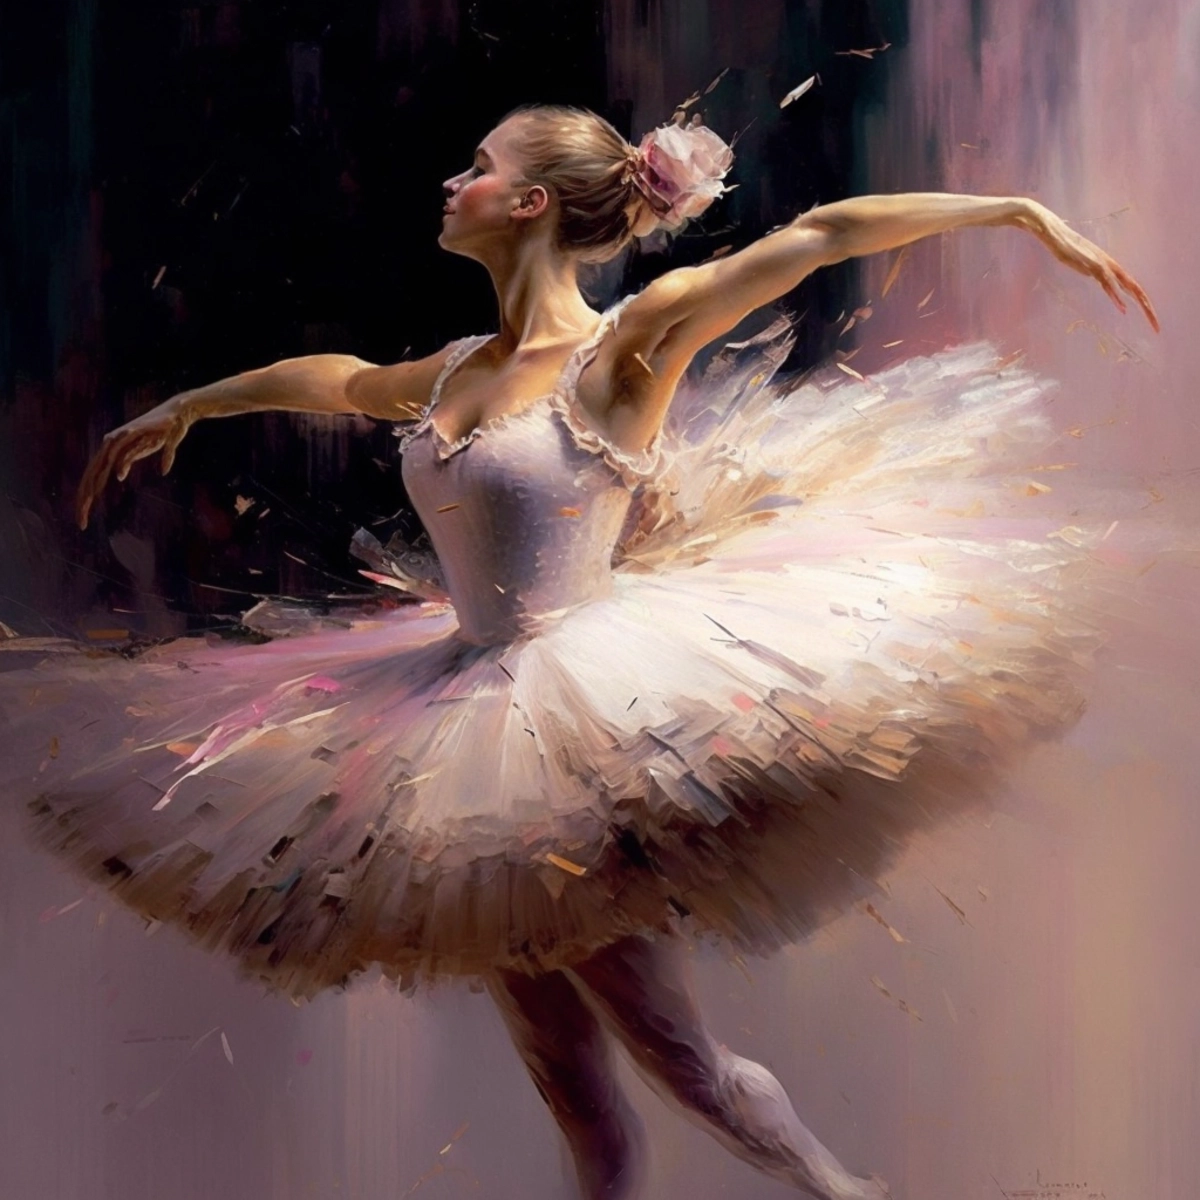 An elegant ballerina poised in a graceful dance pose